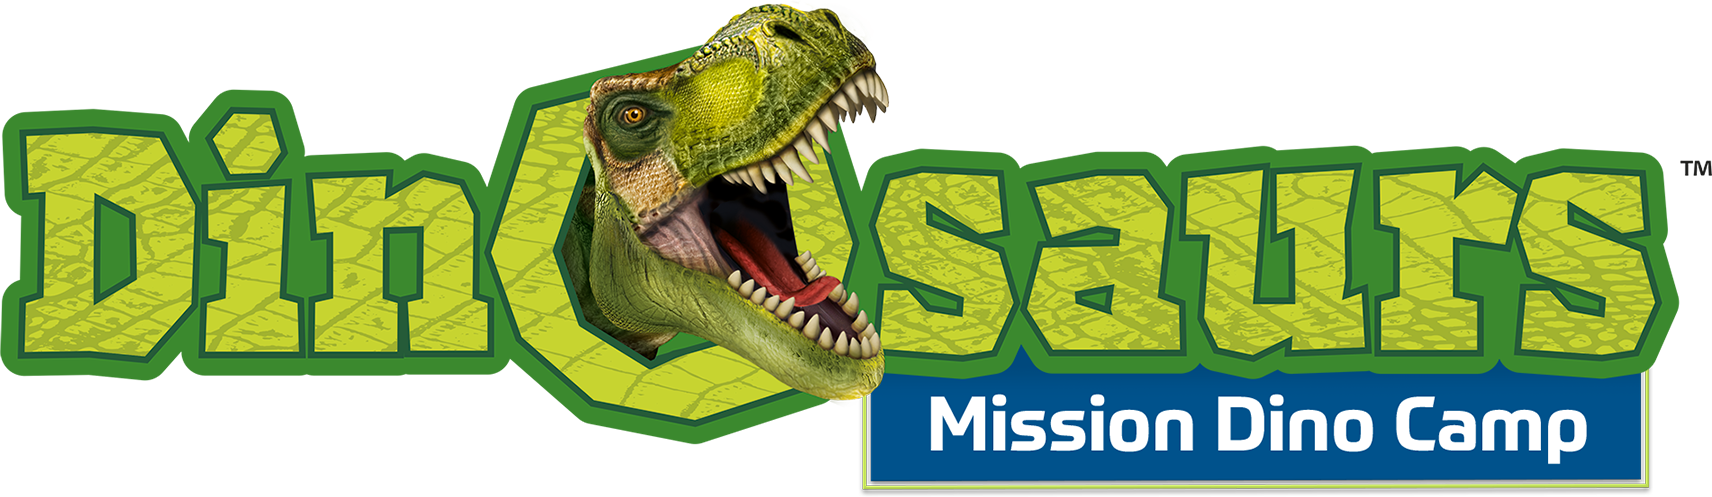 Camp DINOSAURS: Dino Mission